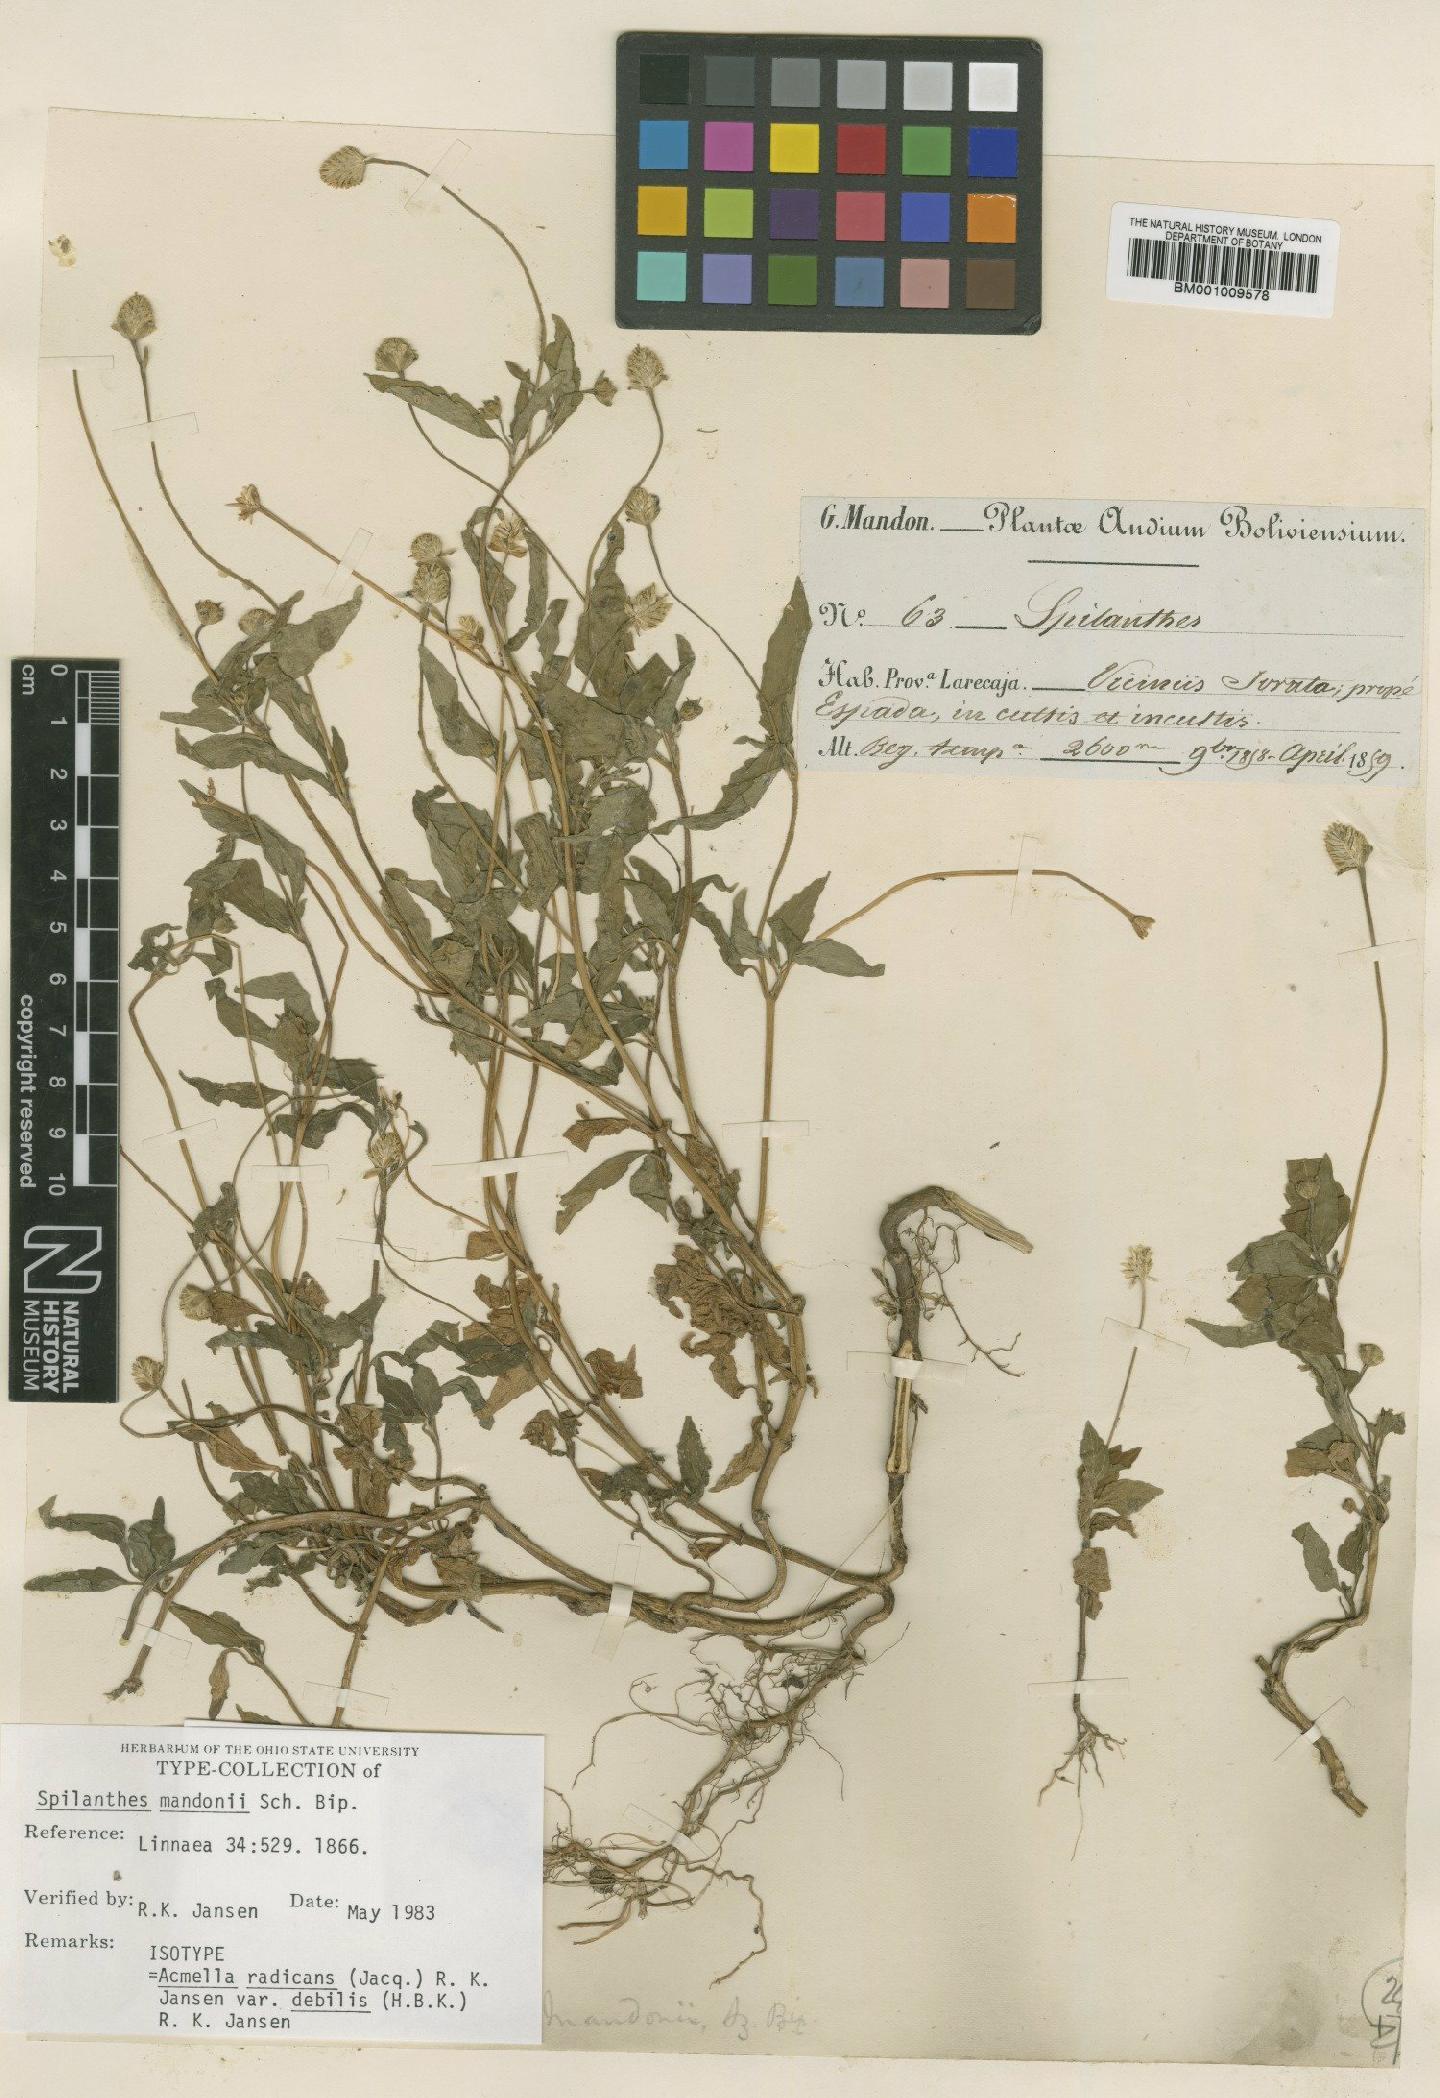 To NHMUK collection (Acmella radicans var. debilis (Kunth) R.K.Jansen; Isotype; NHMUK:ecatalogue:616261)